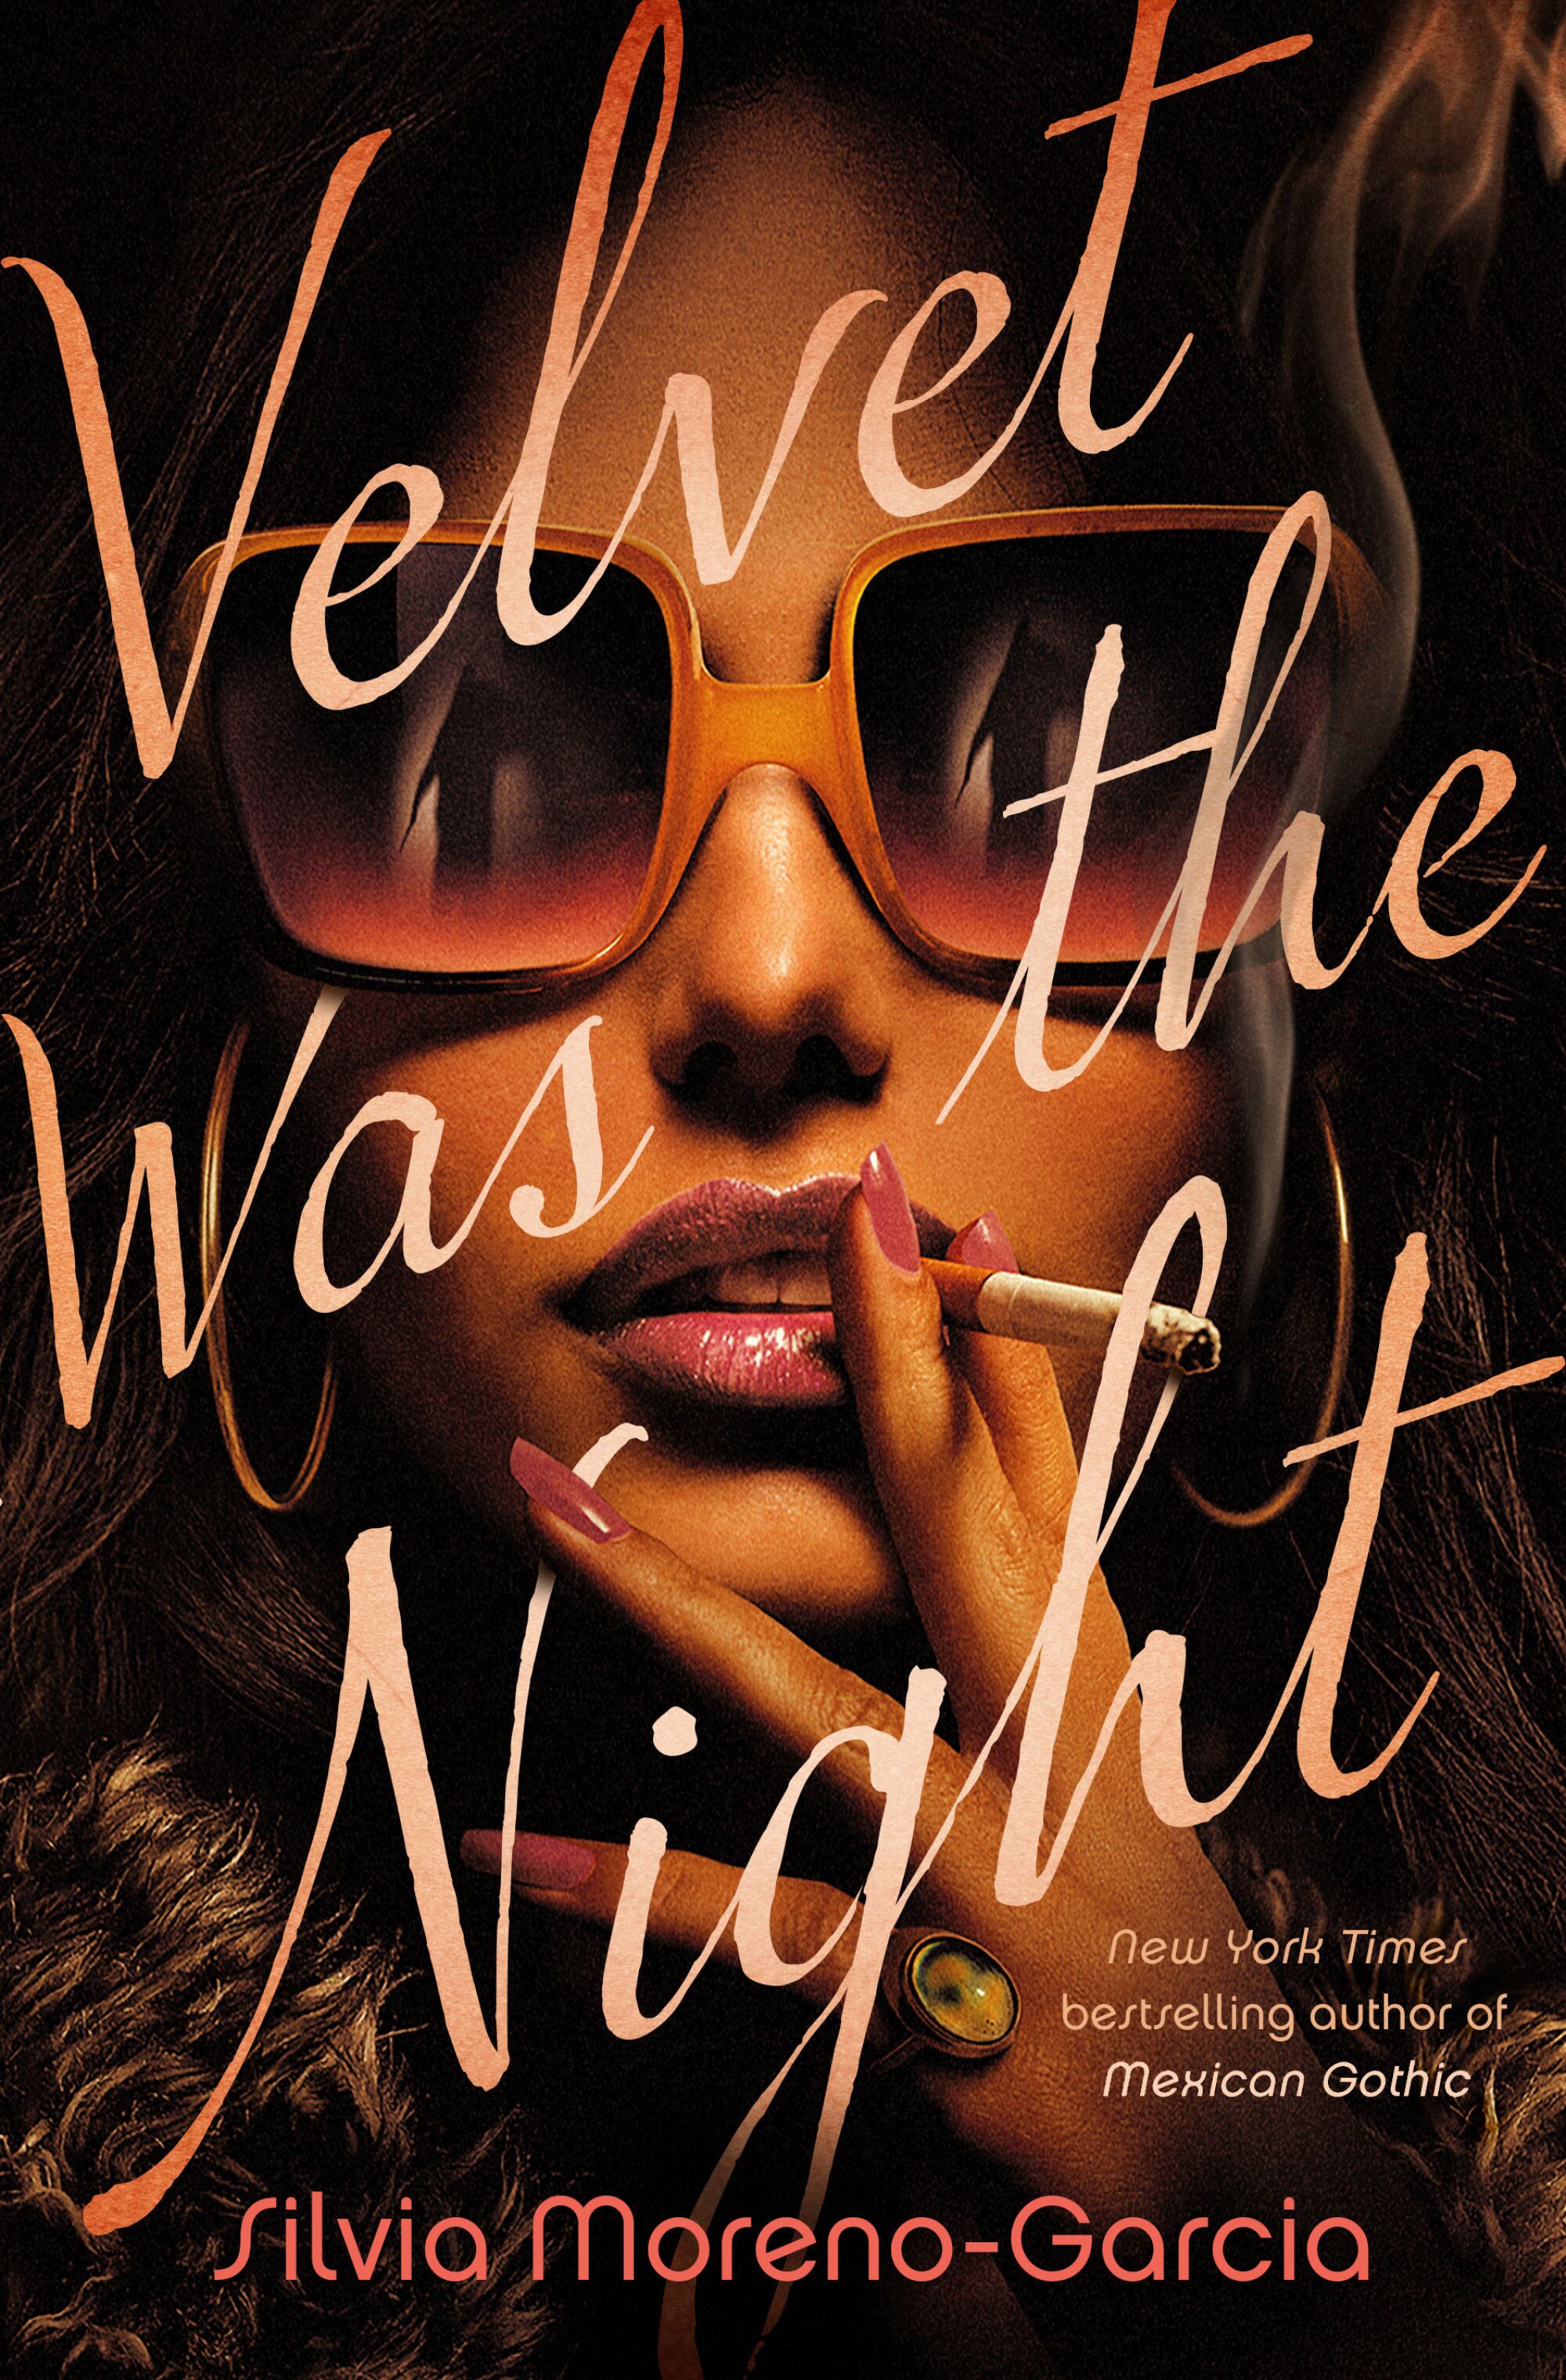 "Velvet Was the Night" by Silvia Moreno-Garcia